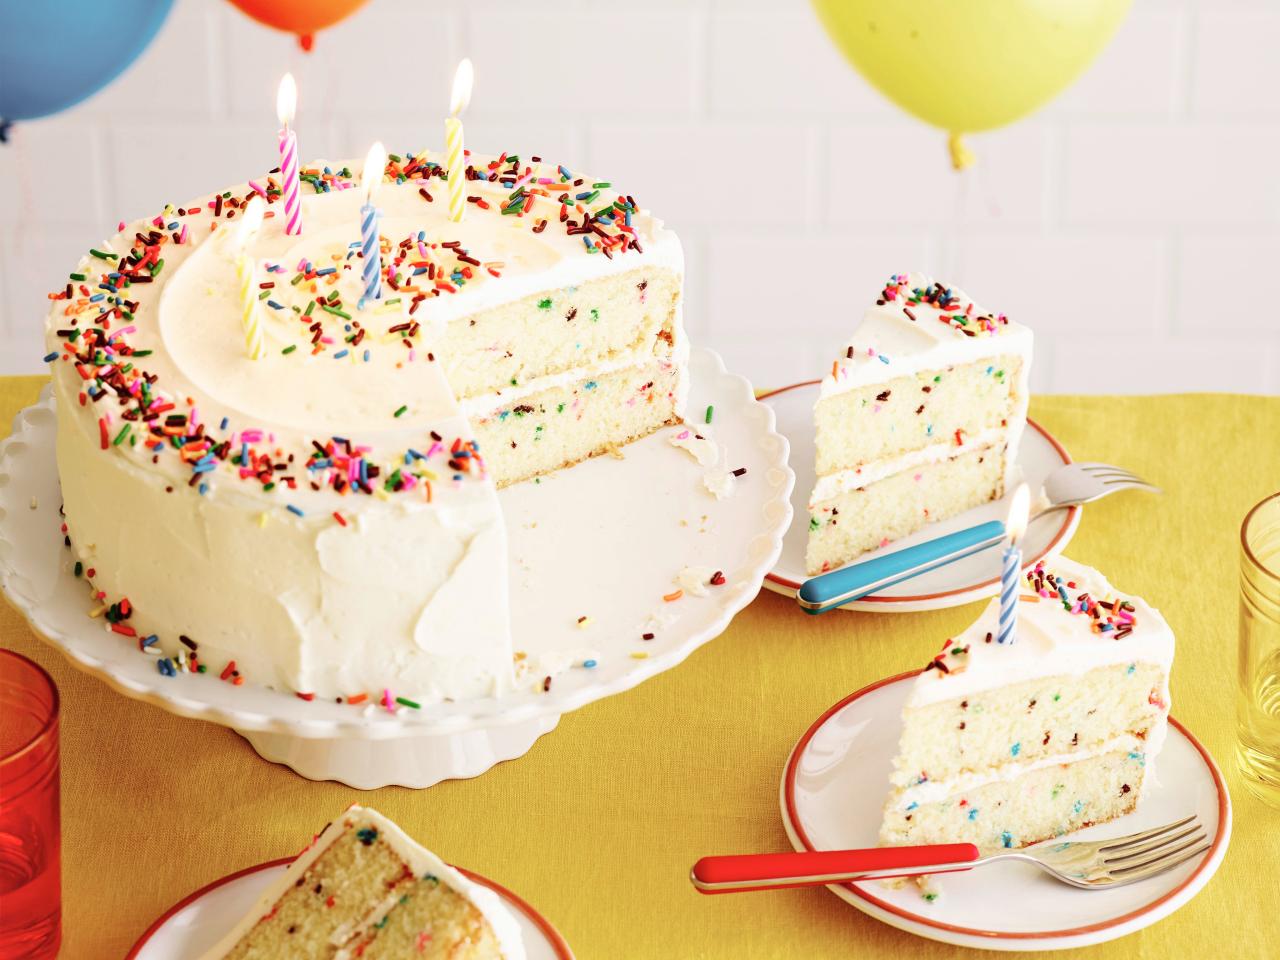 Best Cake Flavors For Birthdays & Celebrations | GoldbellyGoldbelly